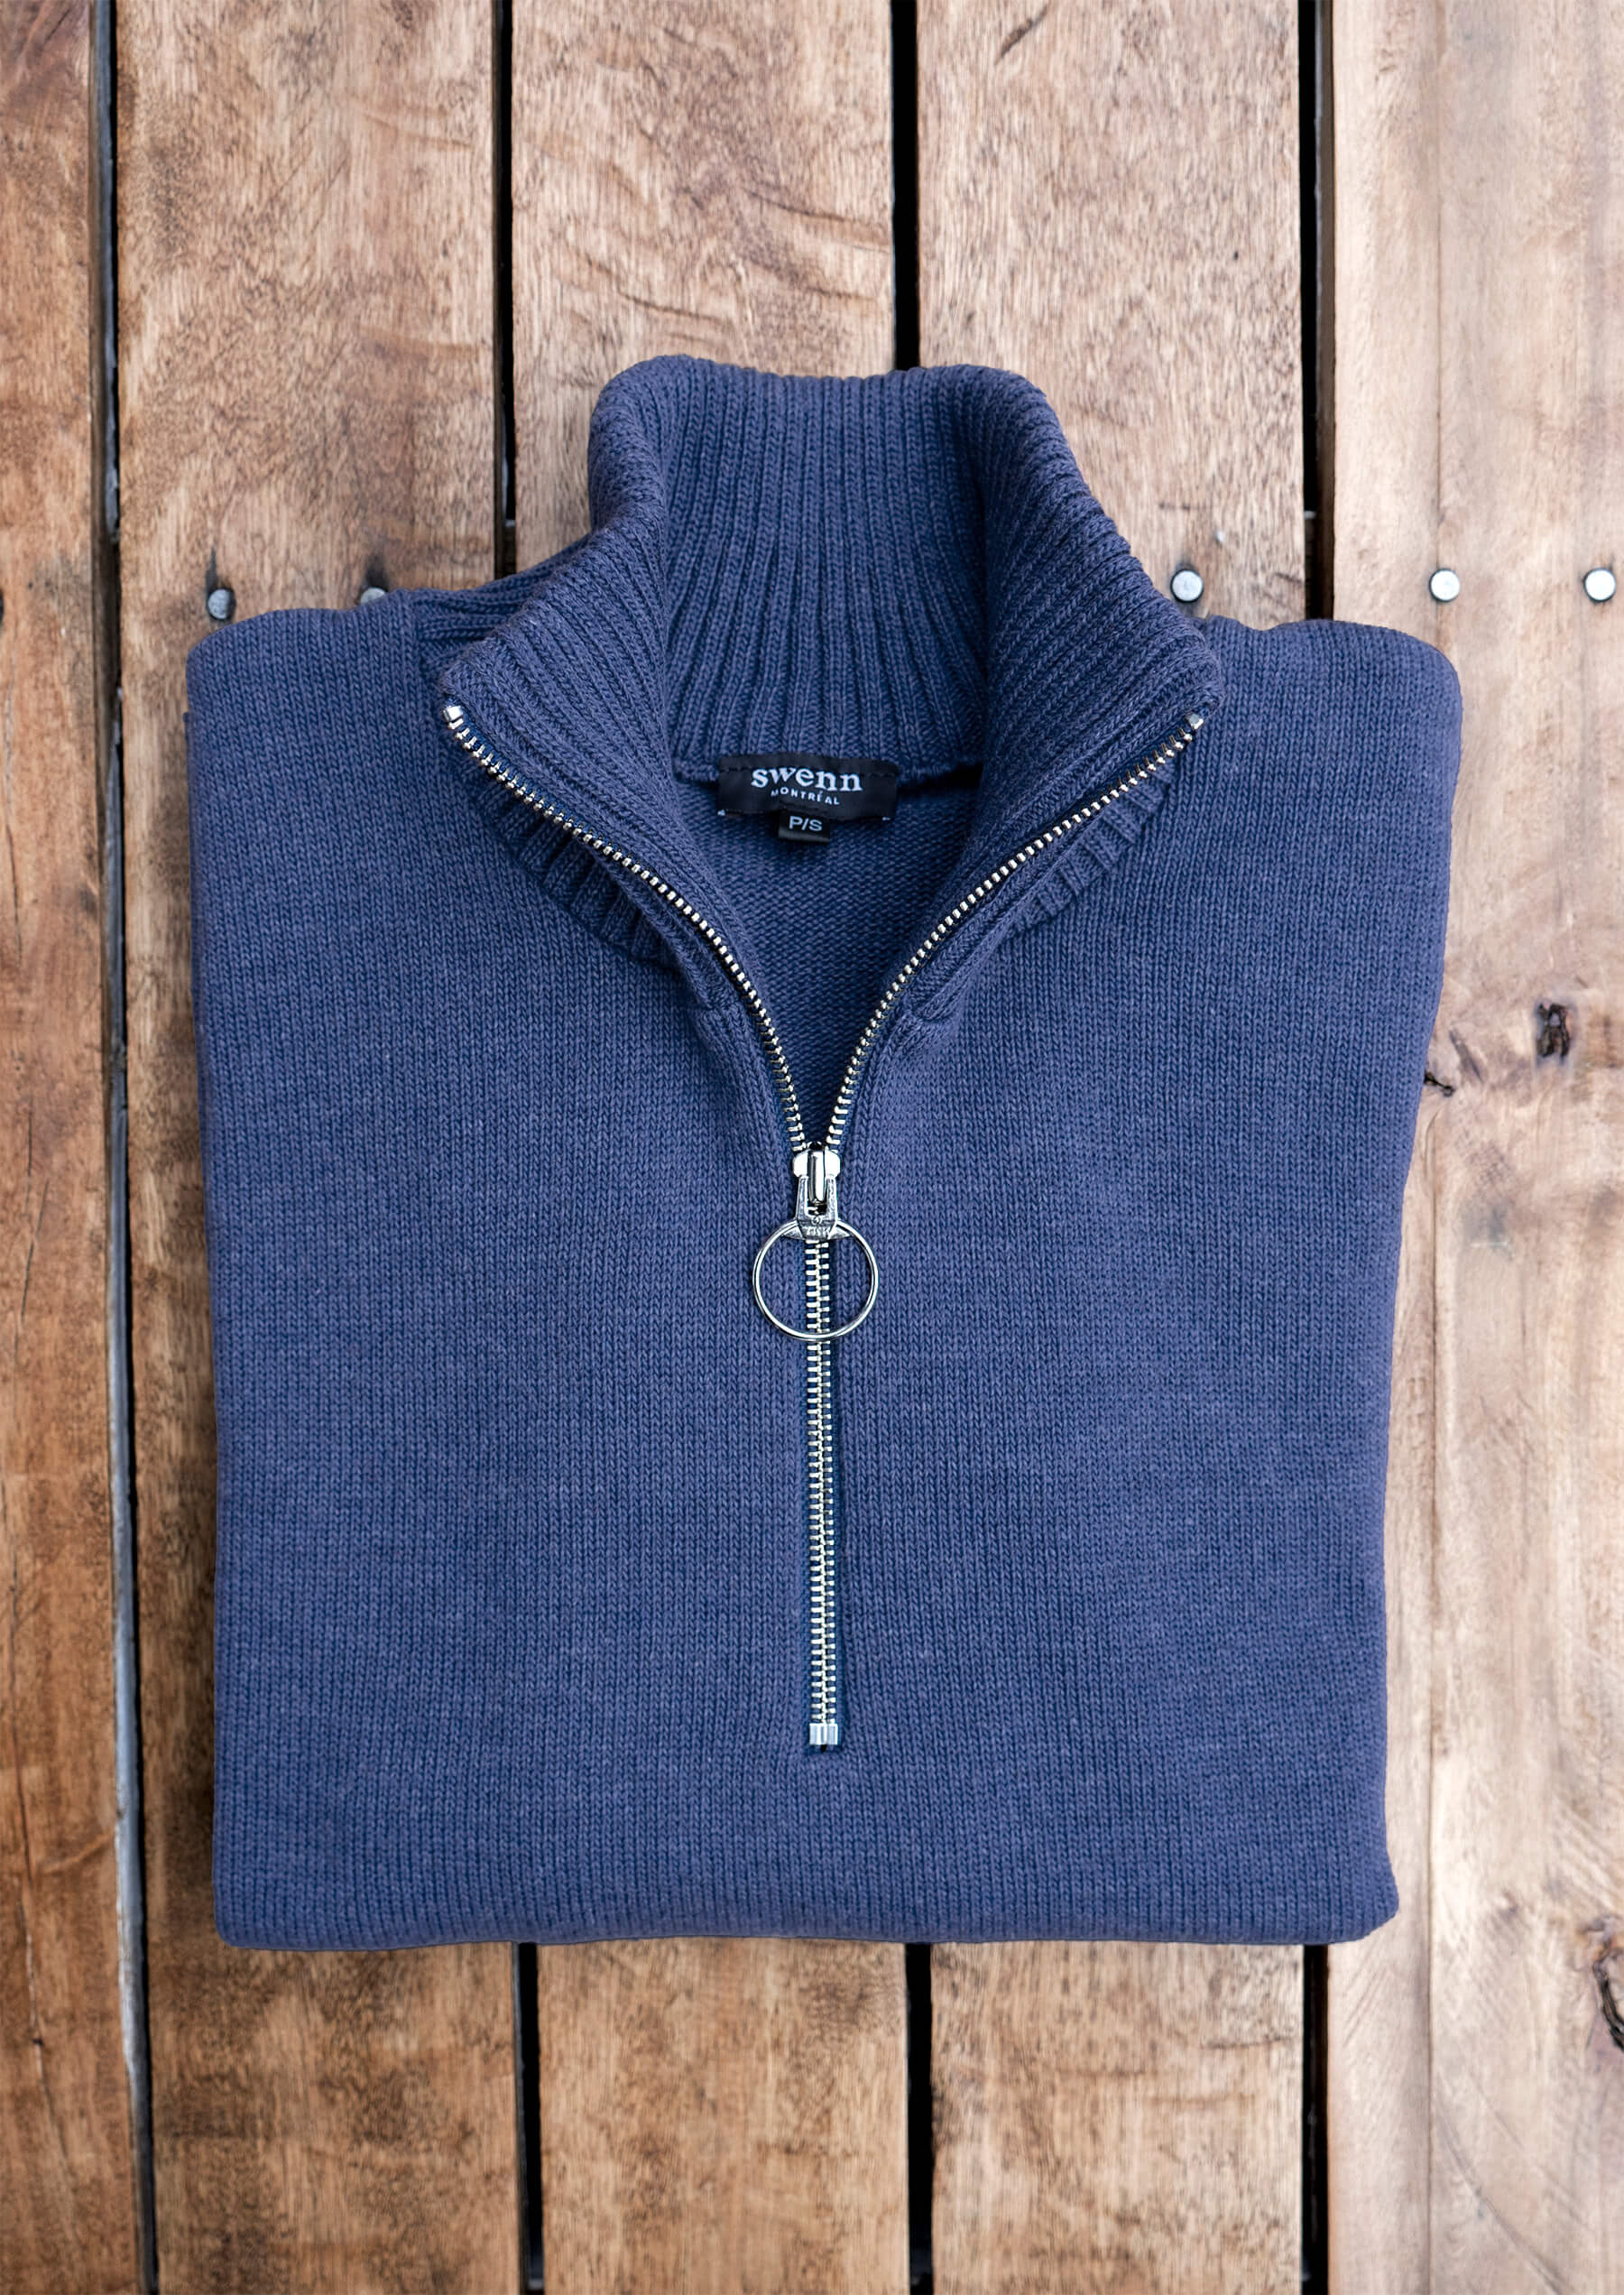 SWENN - Merino wool zip sweater - made in Quebec